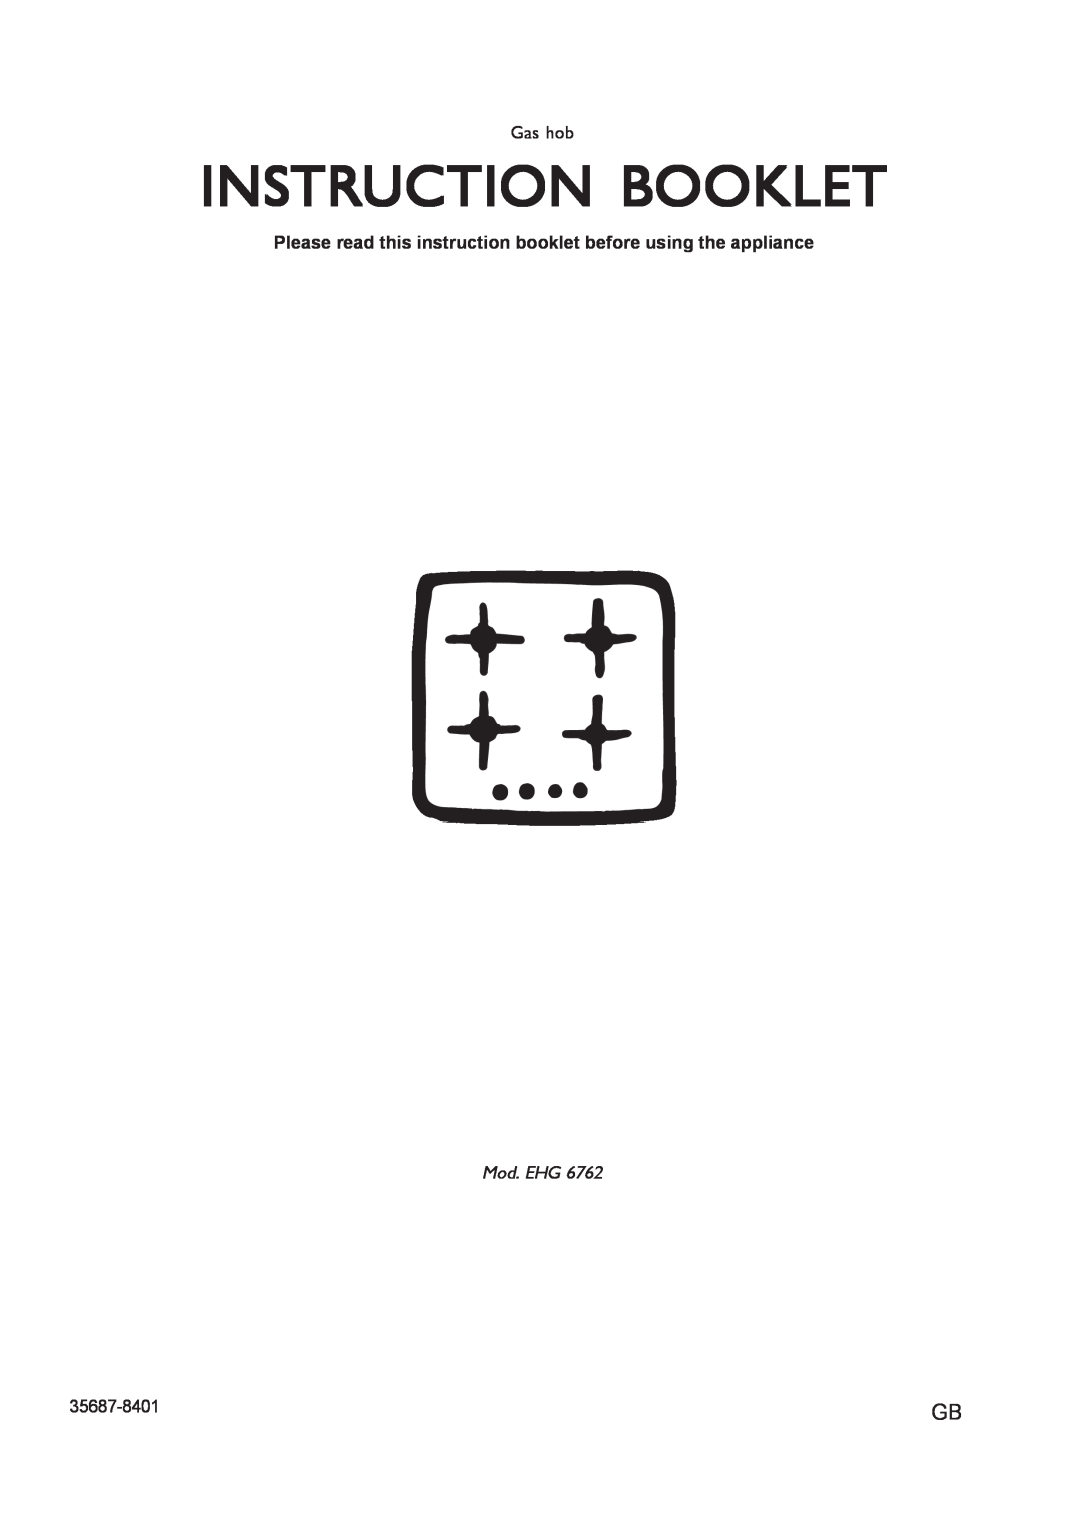 Electrolux EHG 6762 manual Instruction Booklet, Mod. EHG 